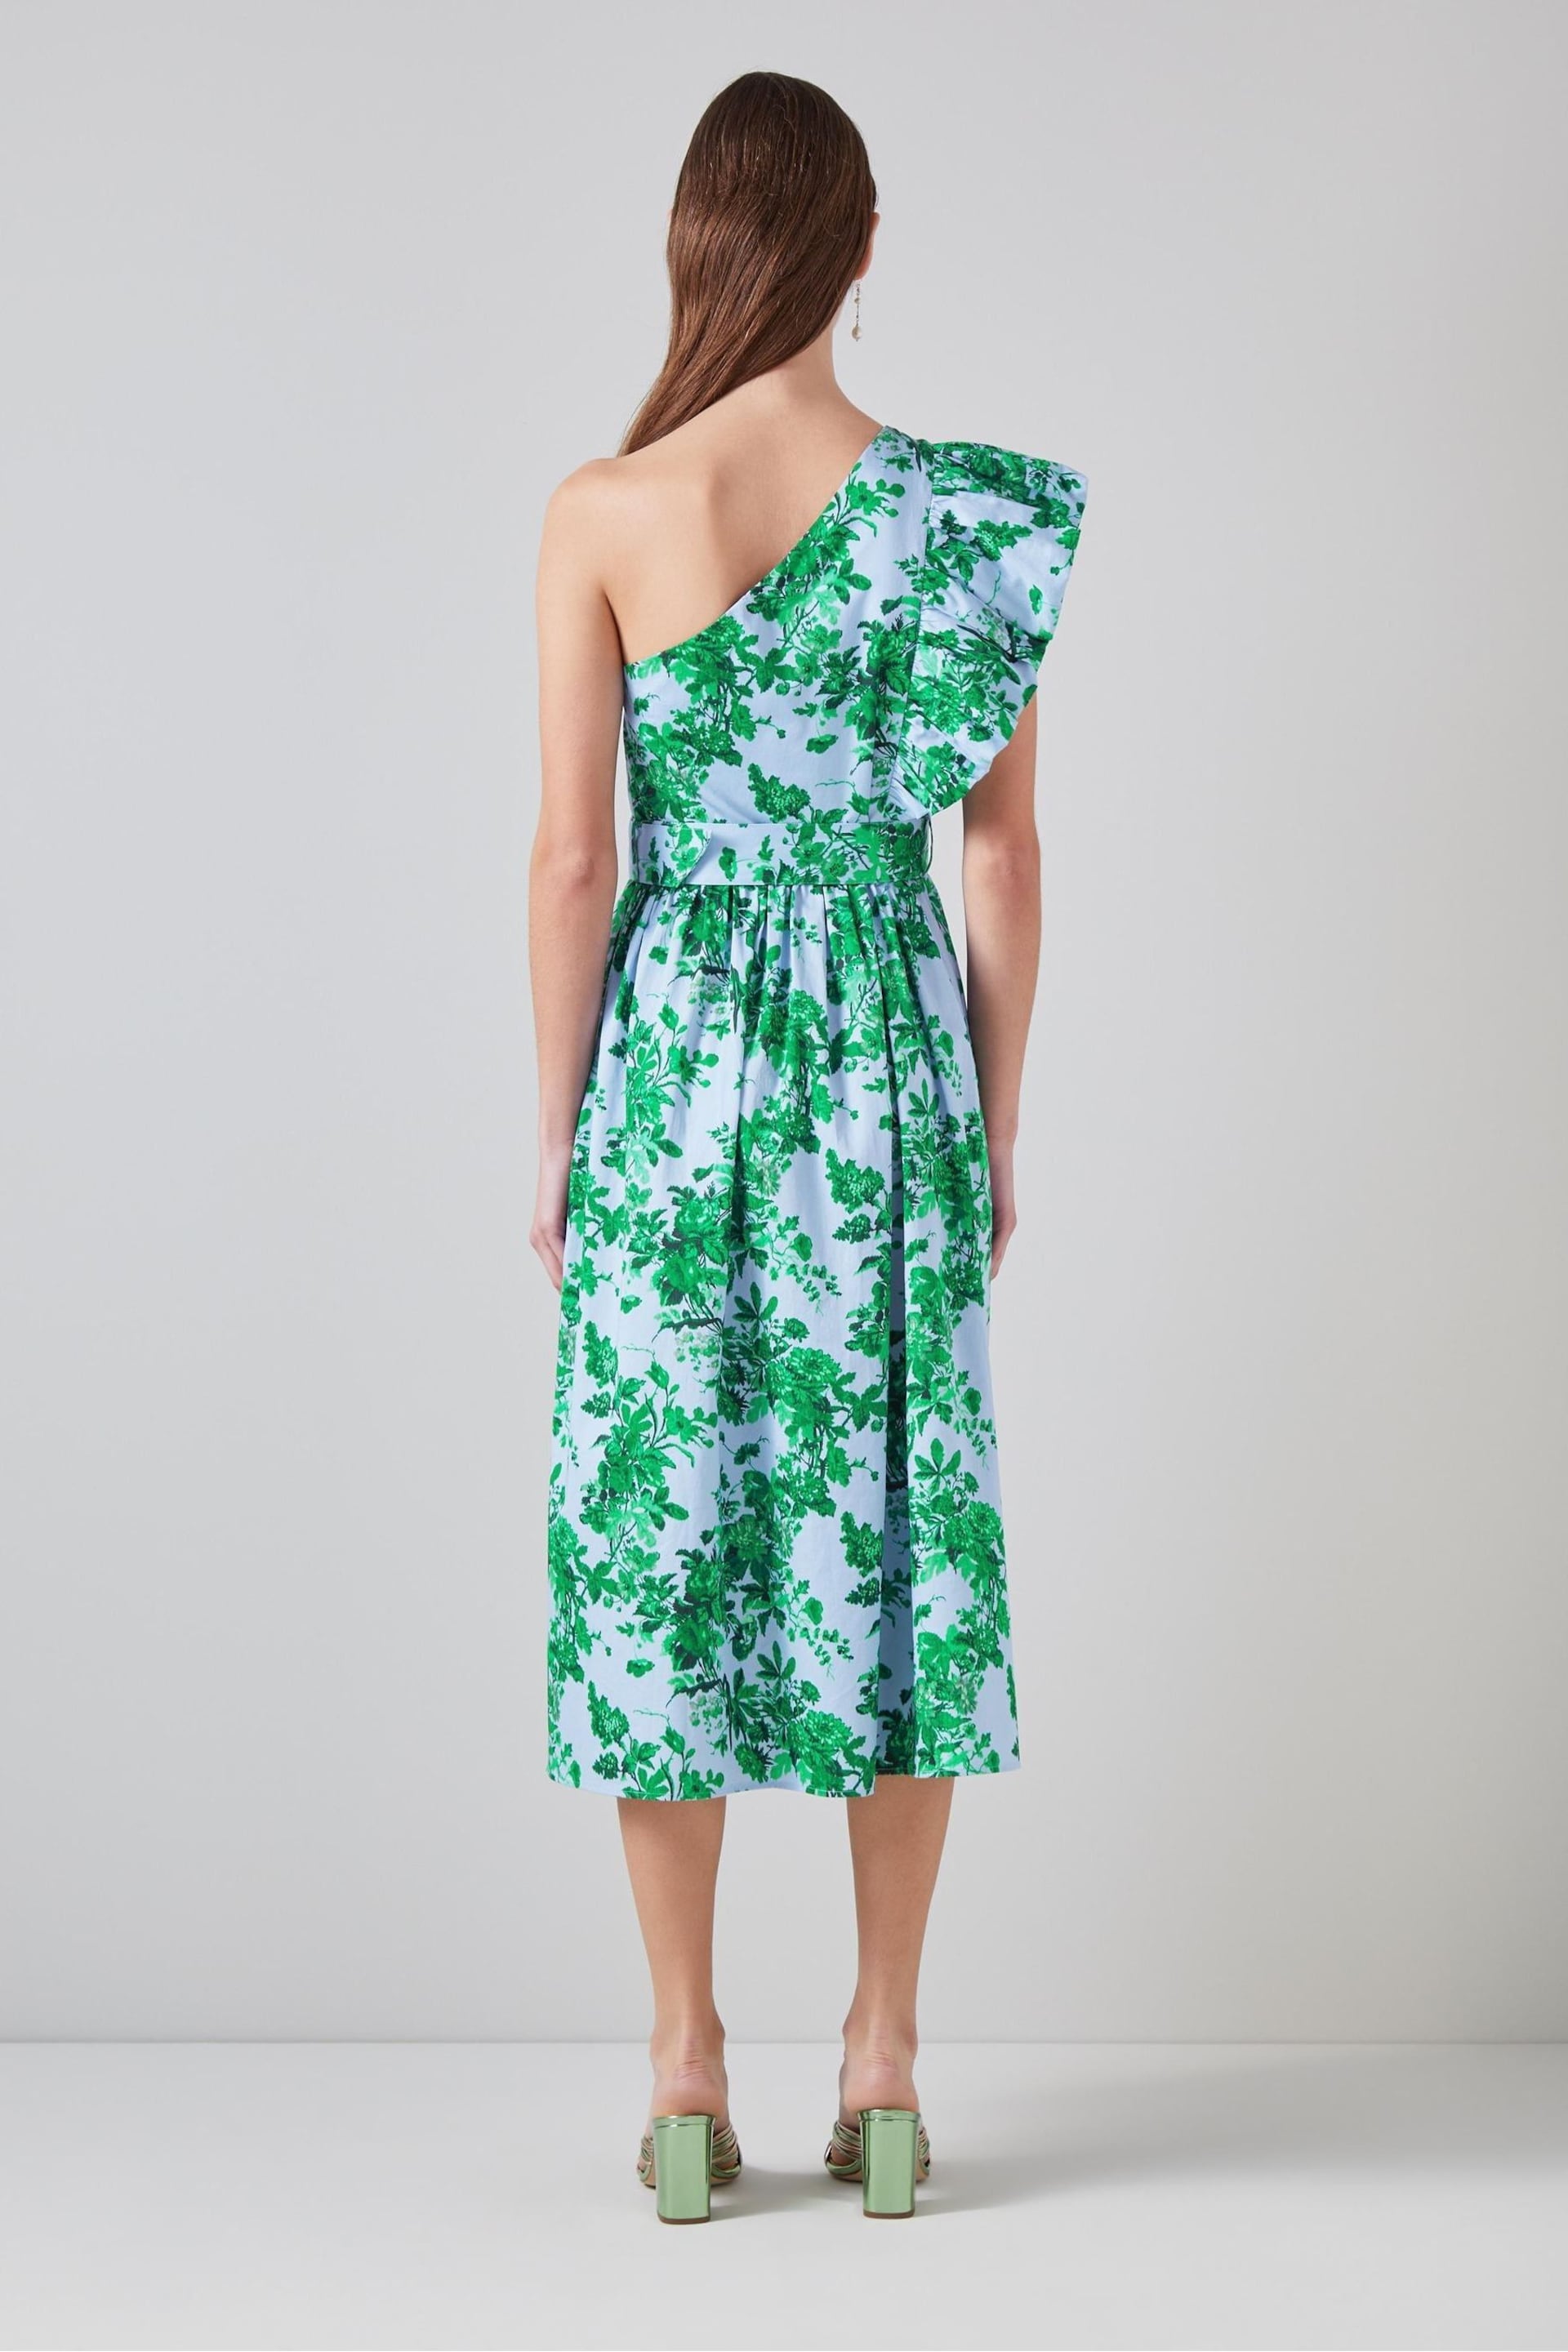 LK Bennett Maud Neon Garden Print Cotton One-Shoulder Dress - Image 2 of 4